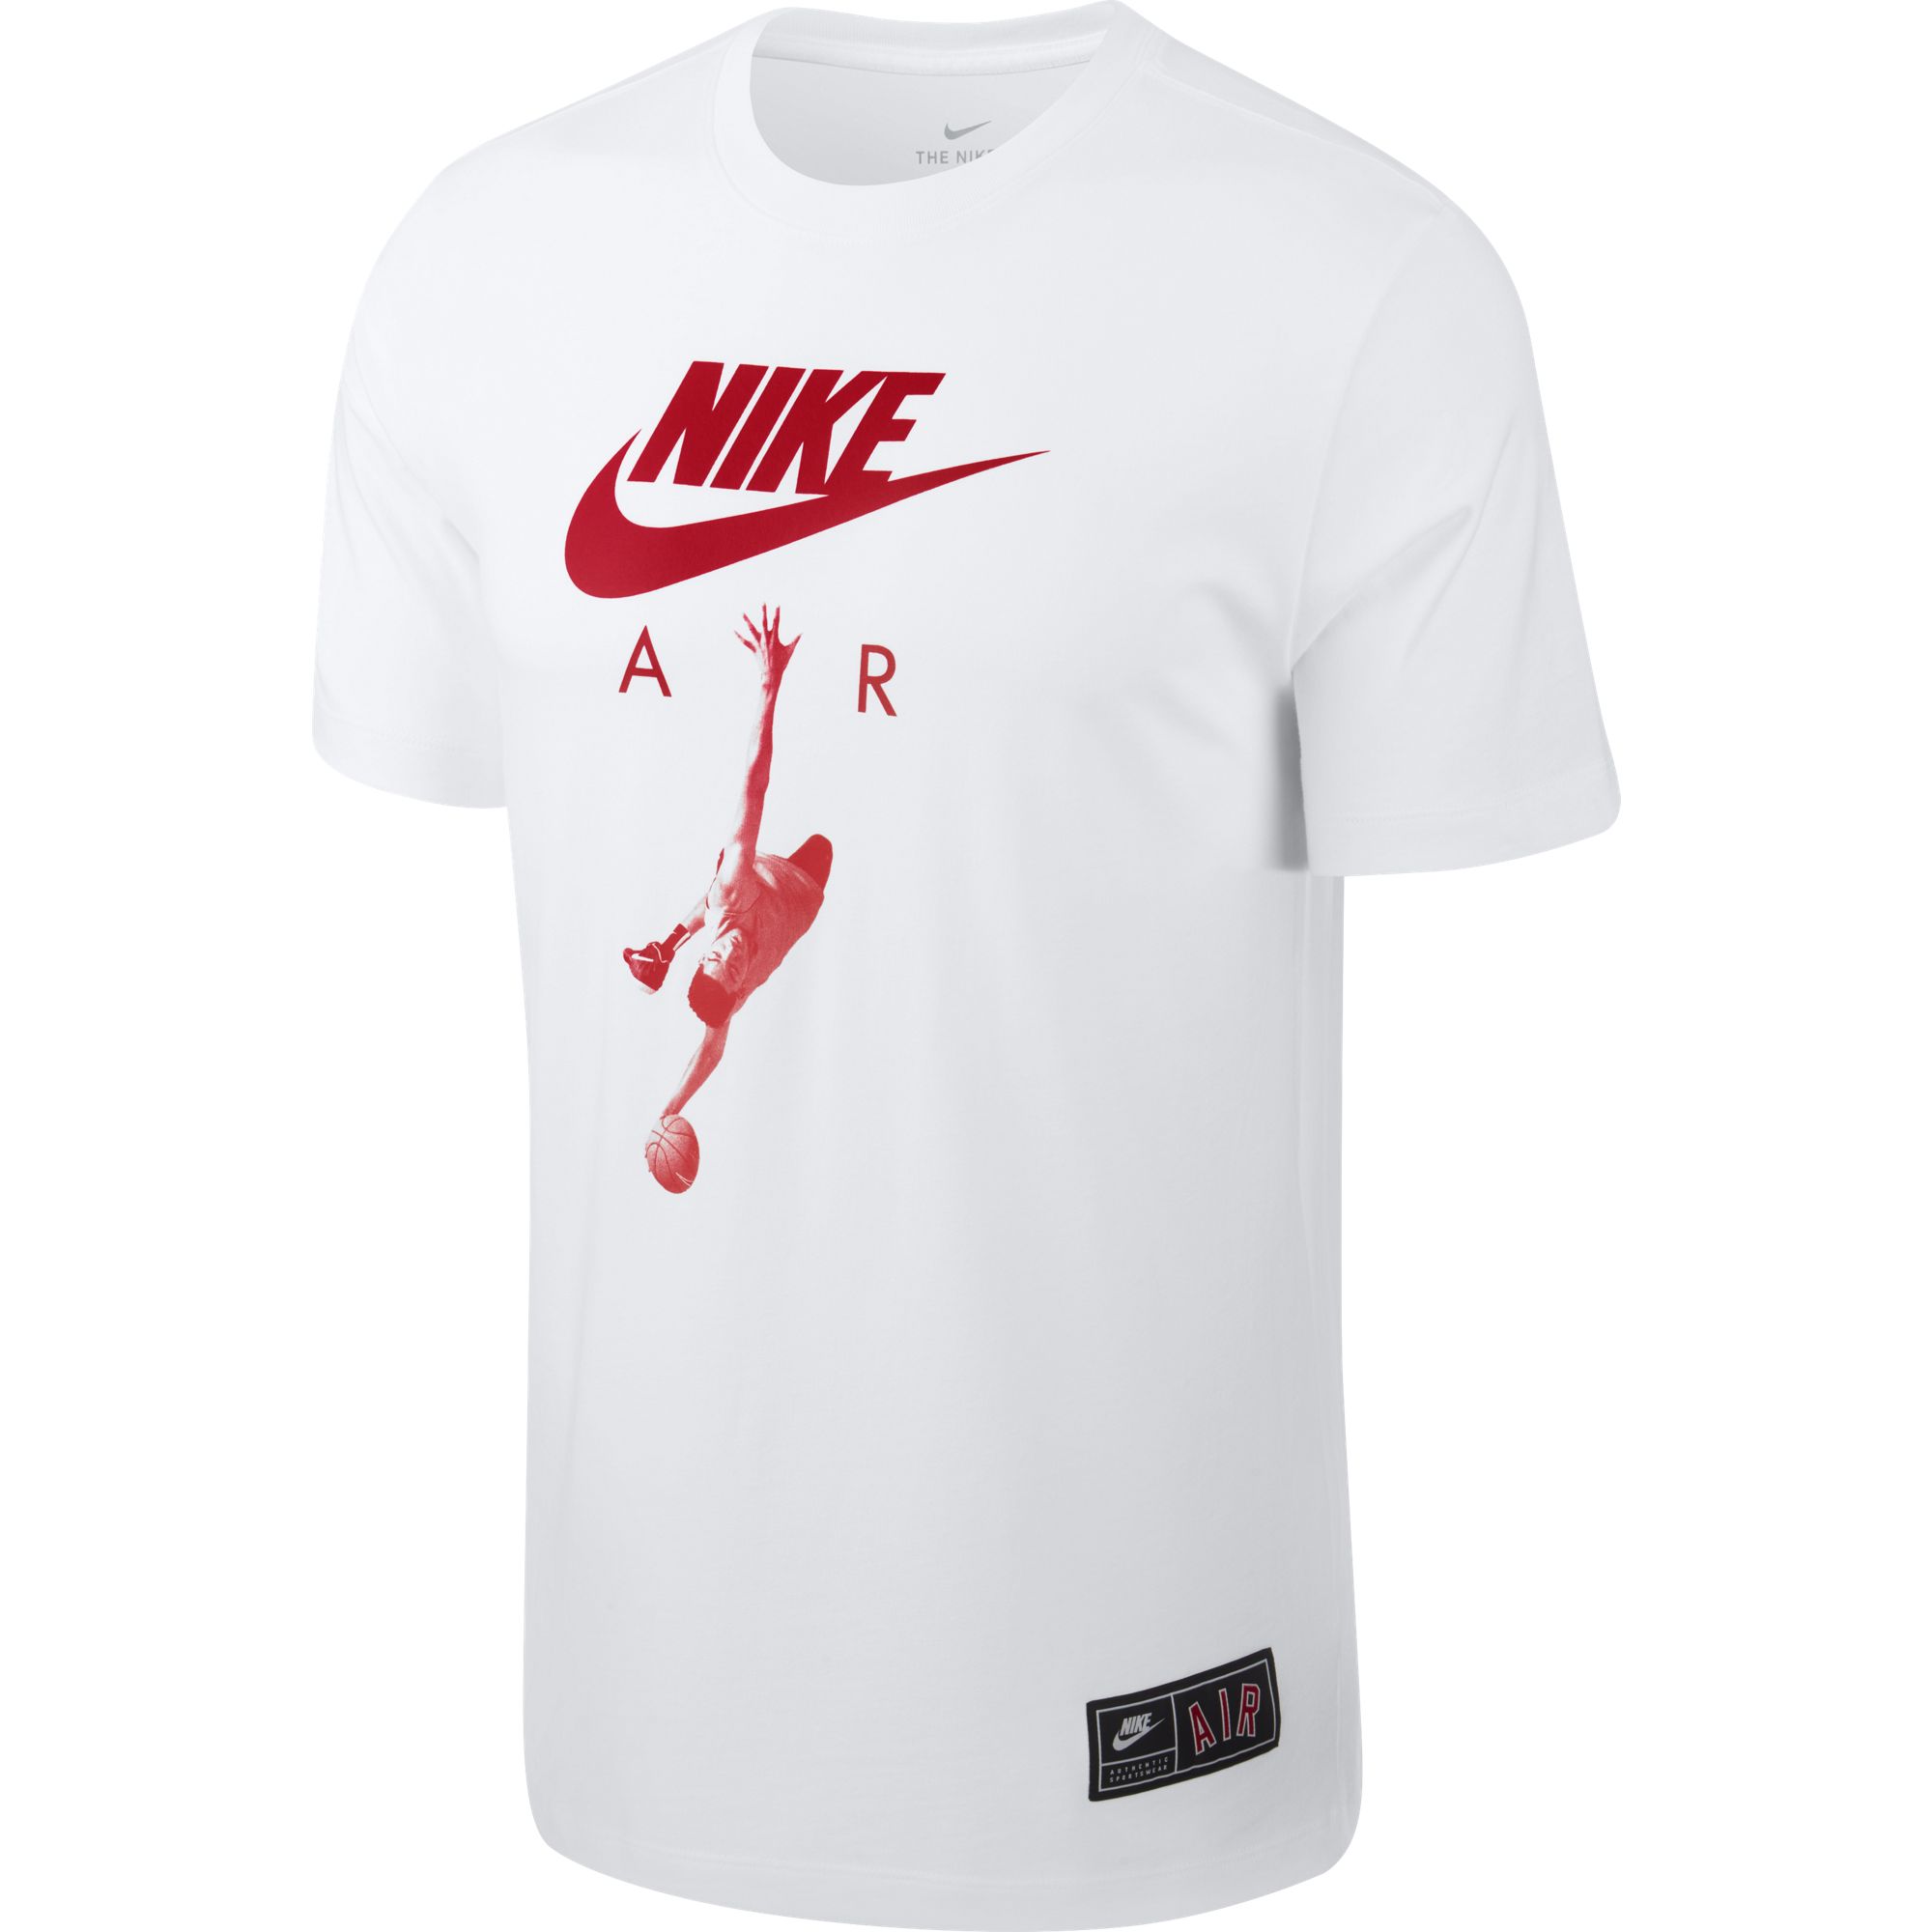 Футболка Nike Air Men's T-Shirt - картинка